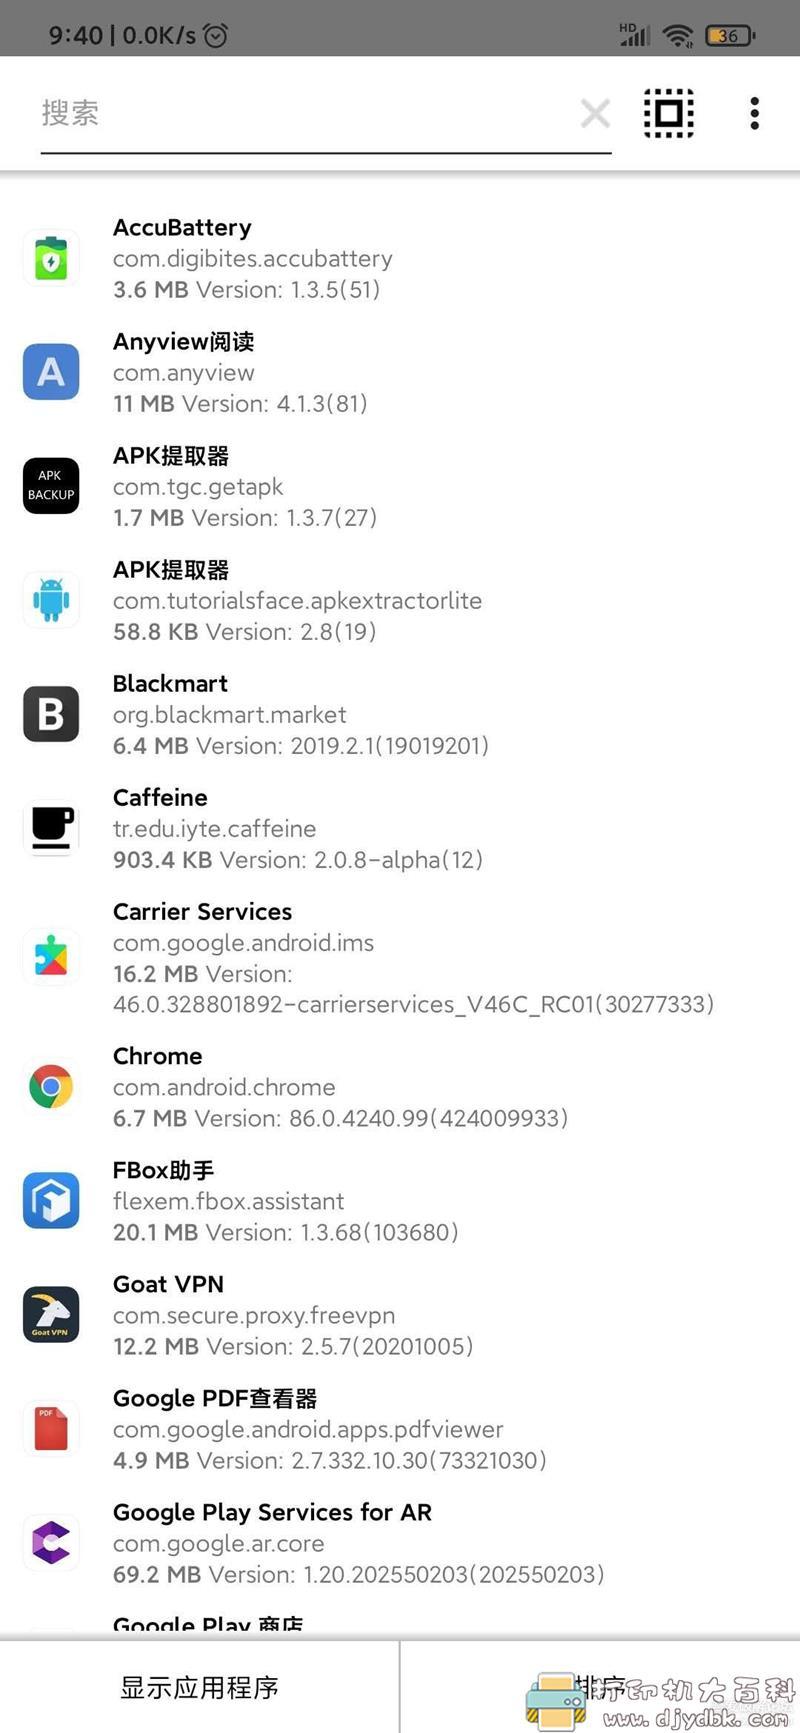 [Android]安卓APK提取器_com.tutorialsface.apkextractorlite_19_2.8，可提取手机自带应用 配图 No.4